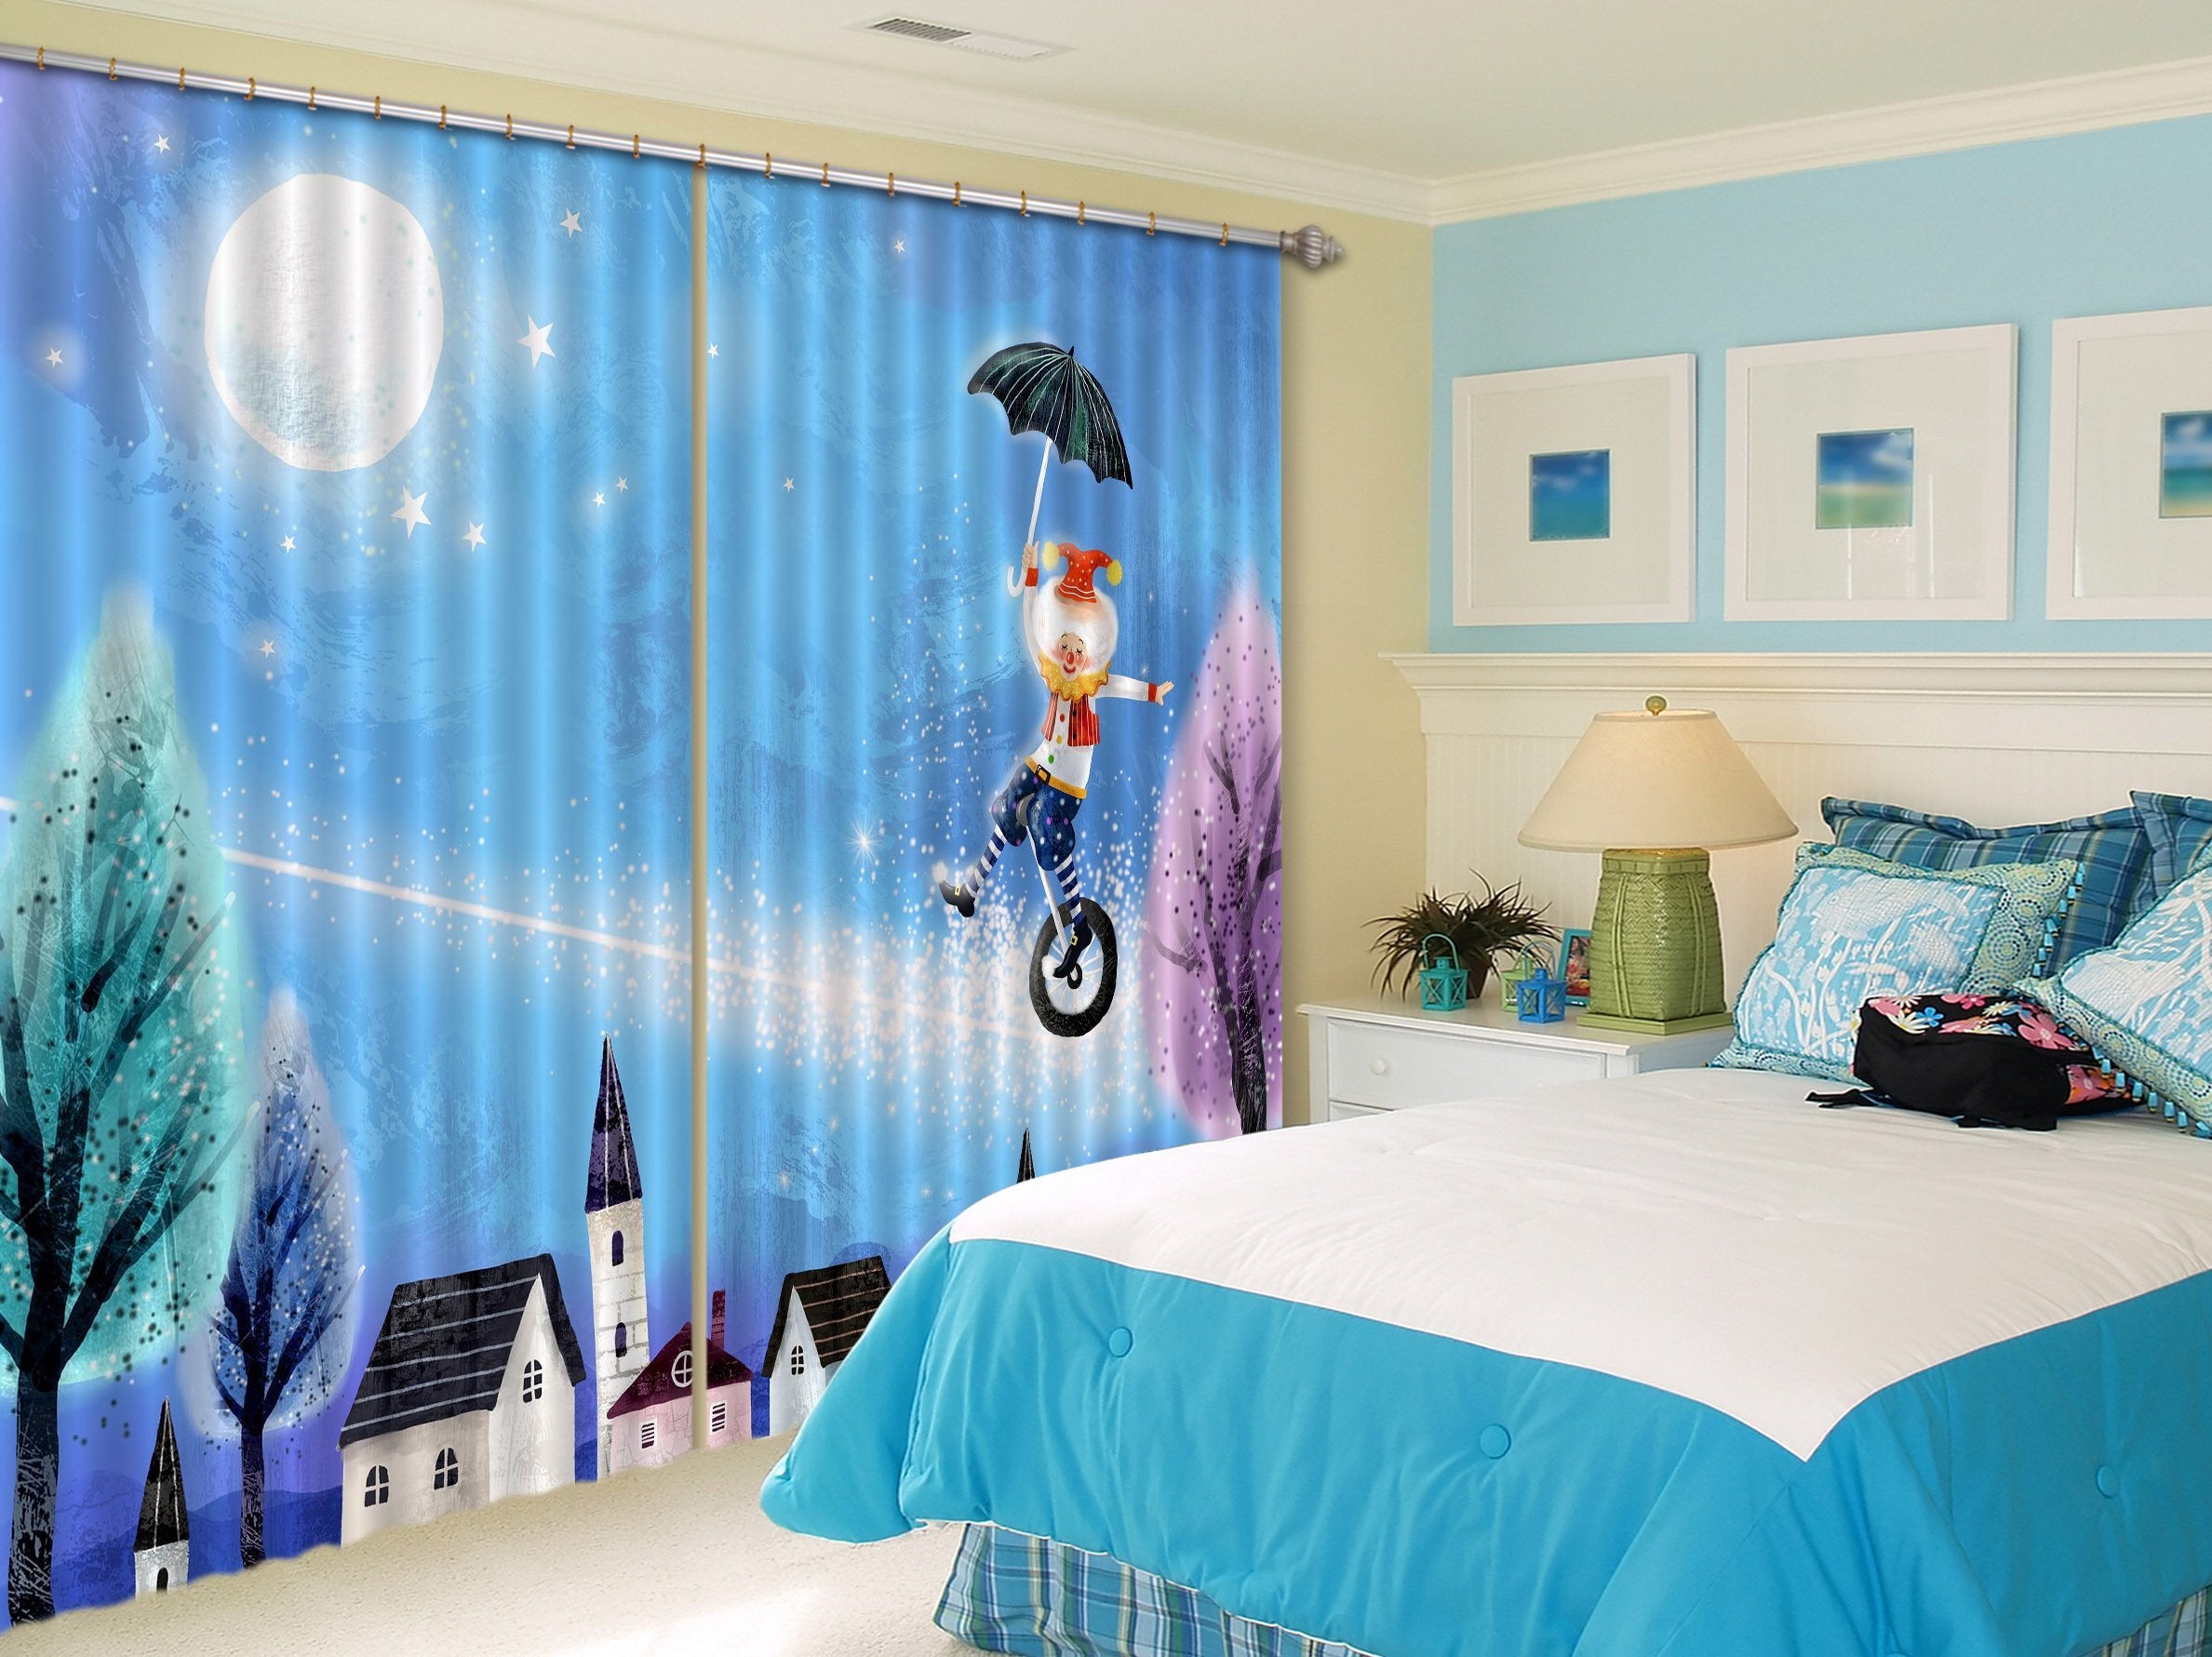 3D Clown Juggler 438 Curtains Drapes Wallpaper AJ Wallpaper 